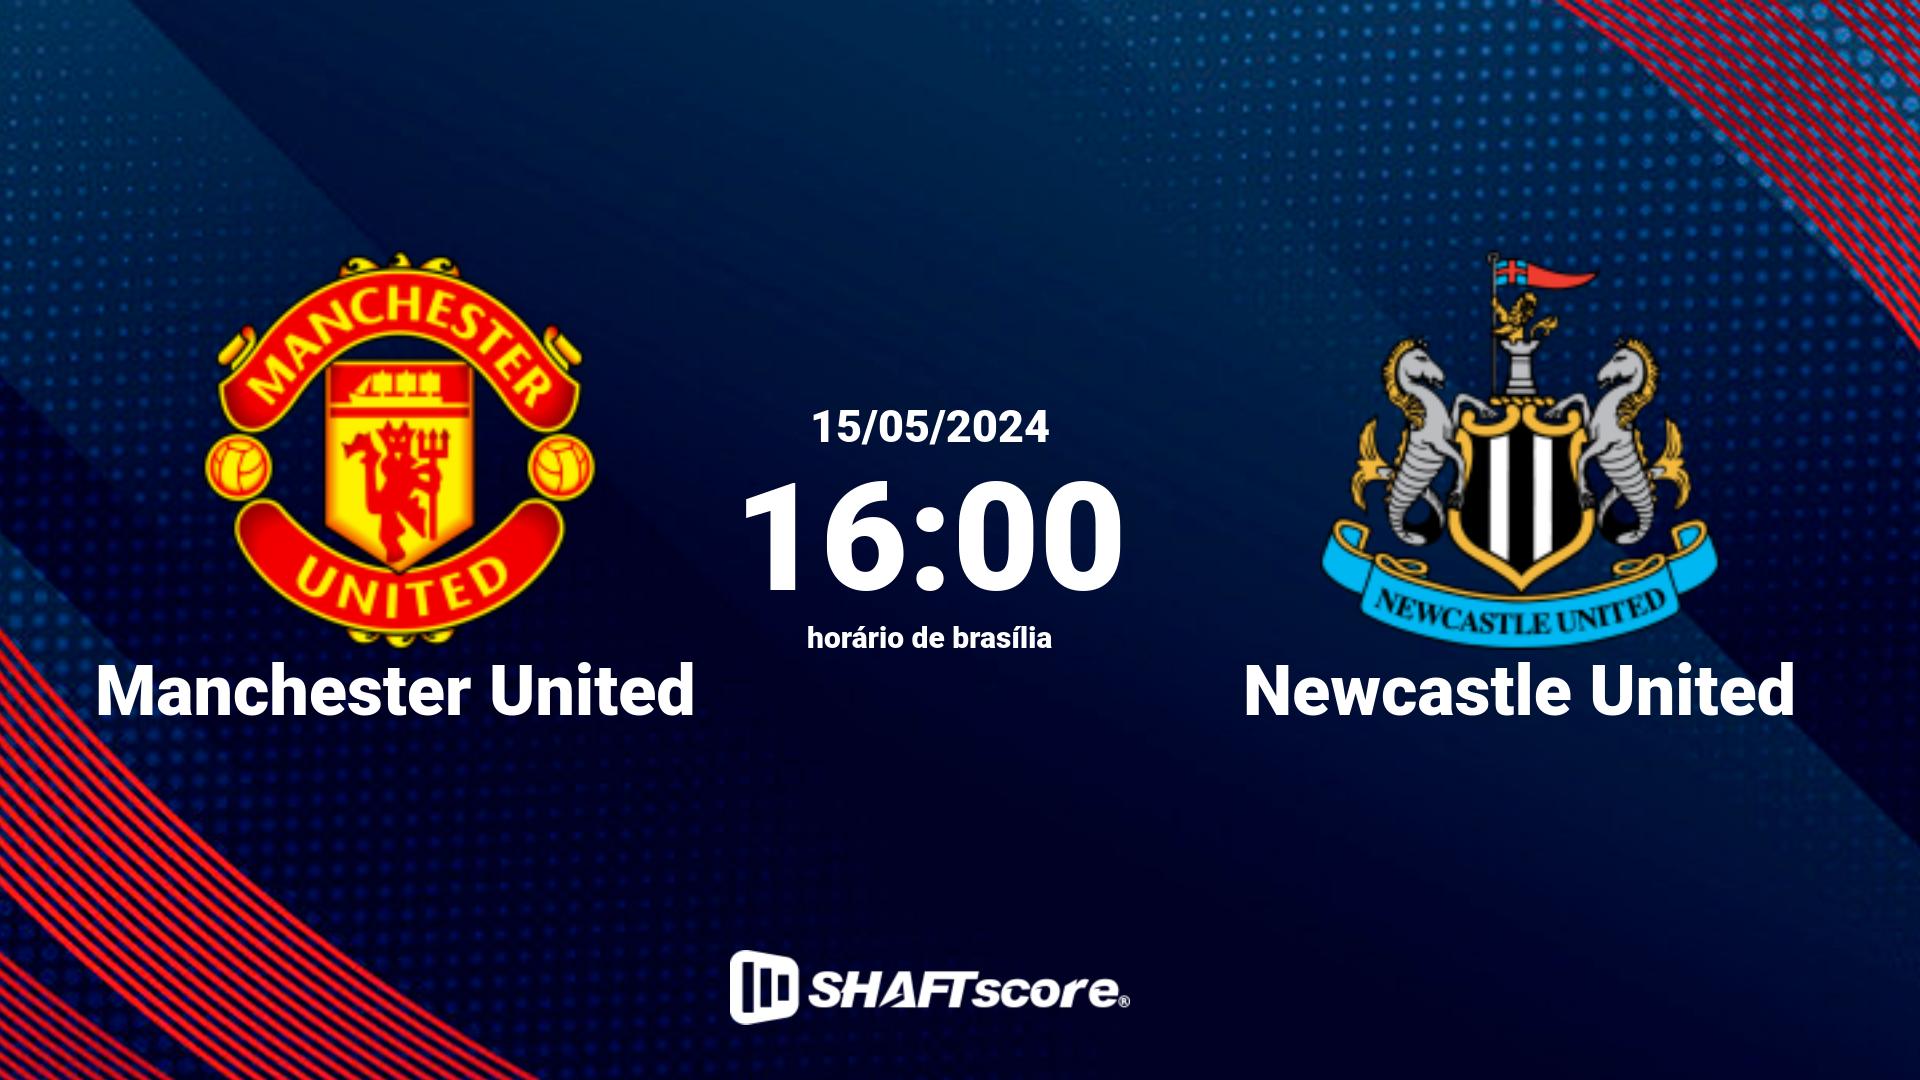 Estatísticas do jogo Manchester United vs Newcastle United 15.05 16:00